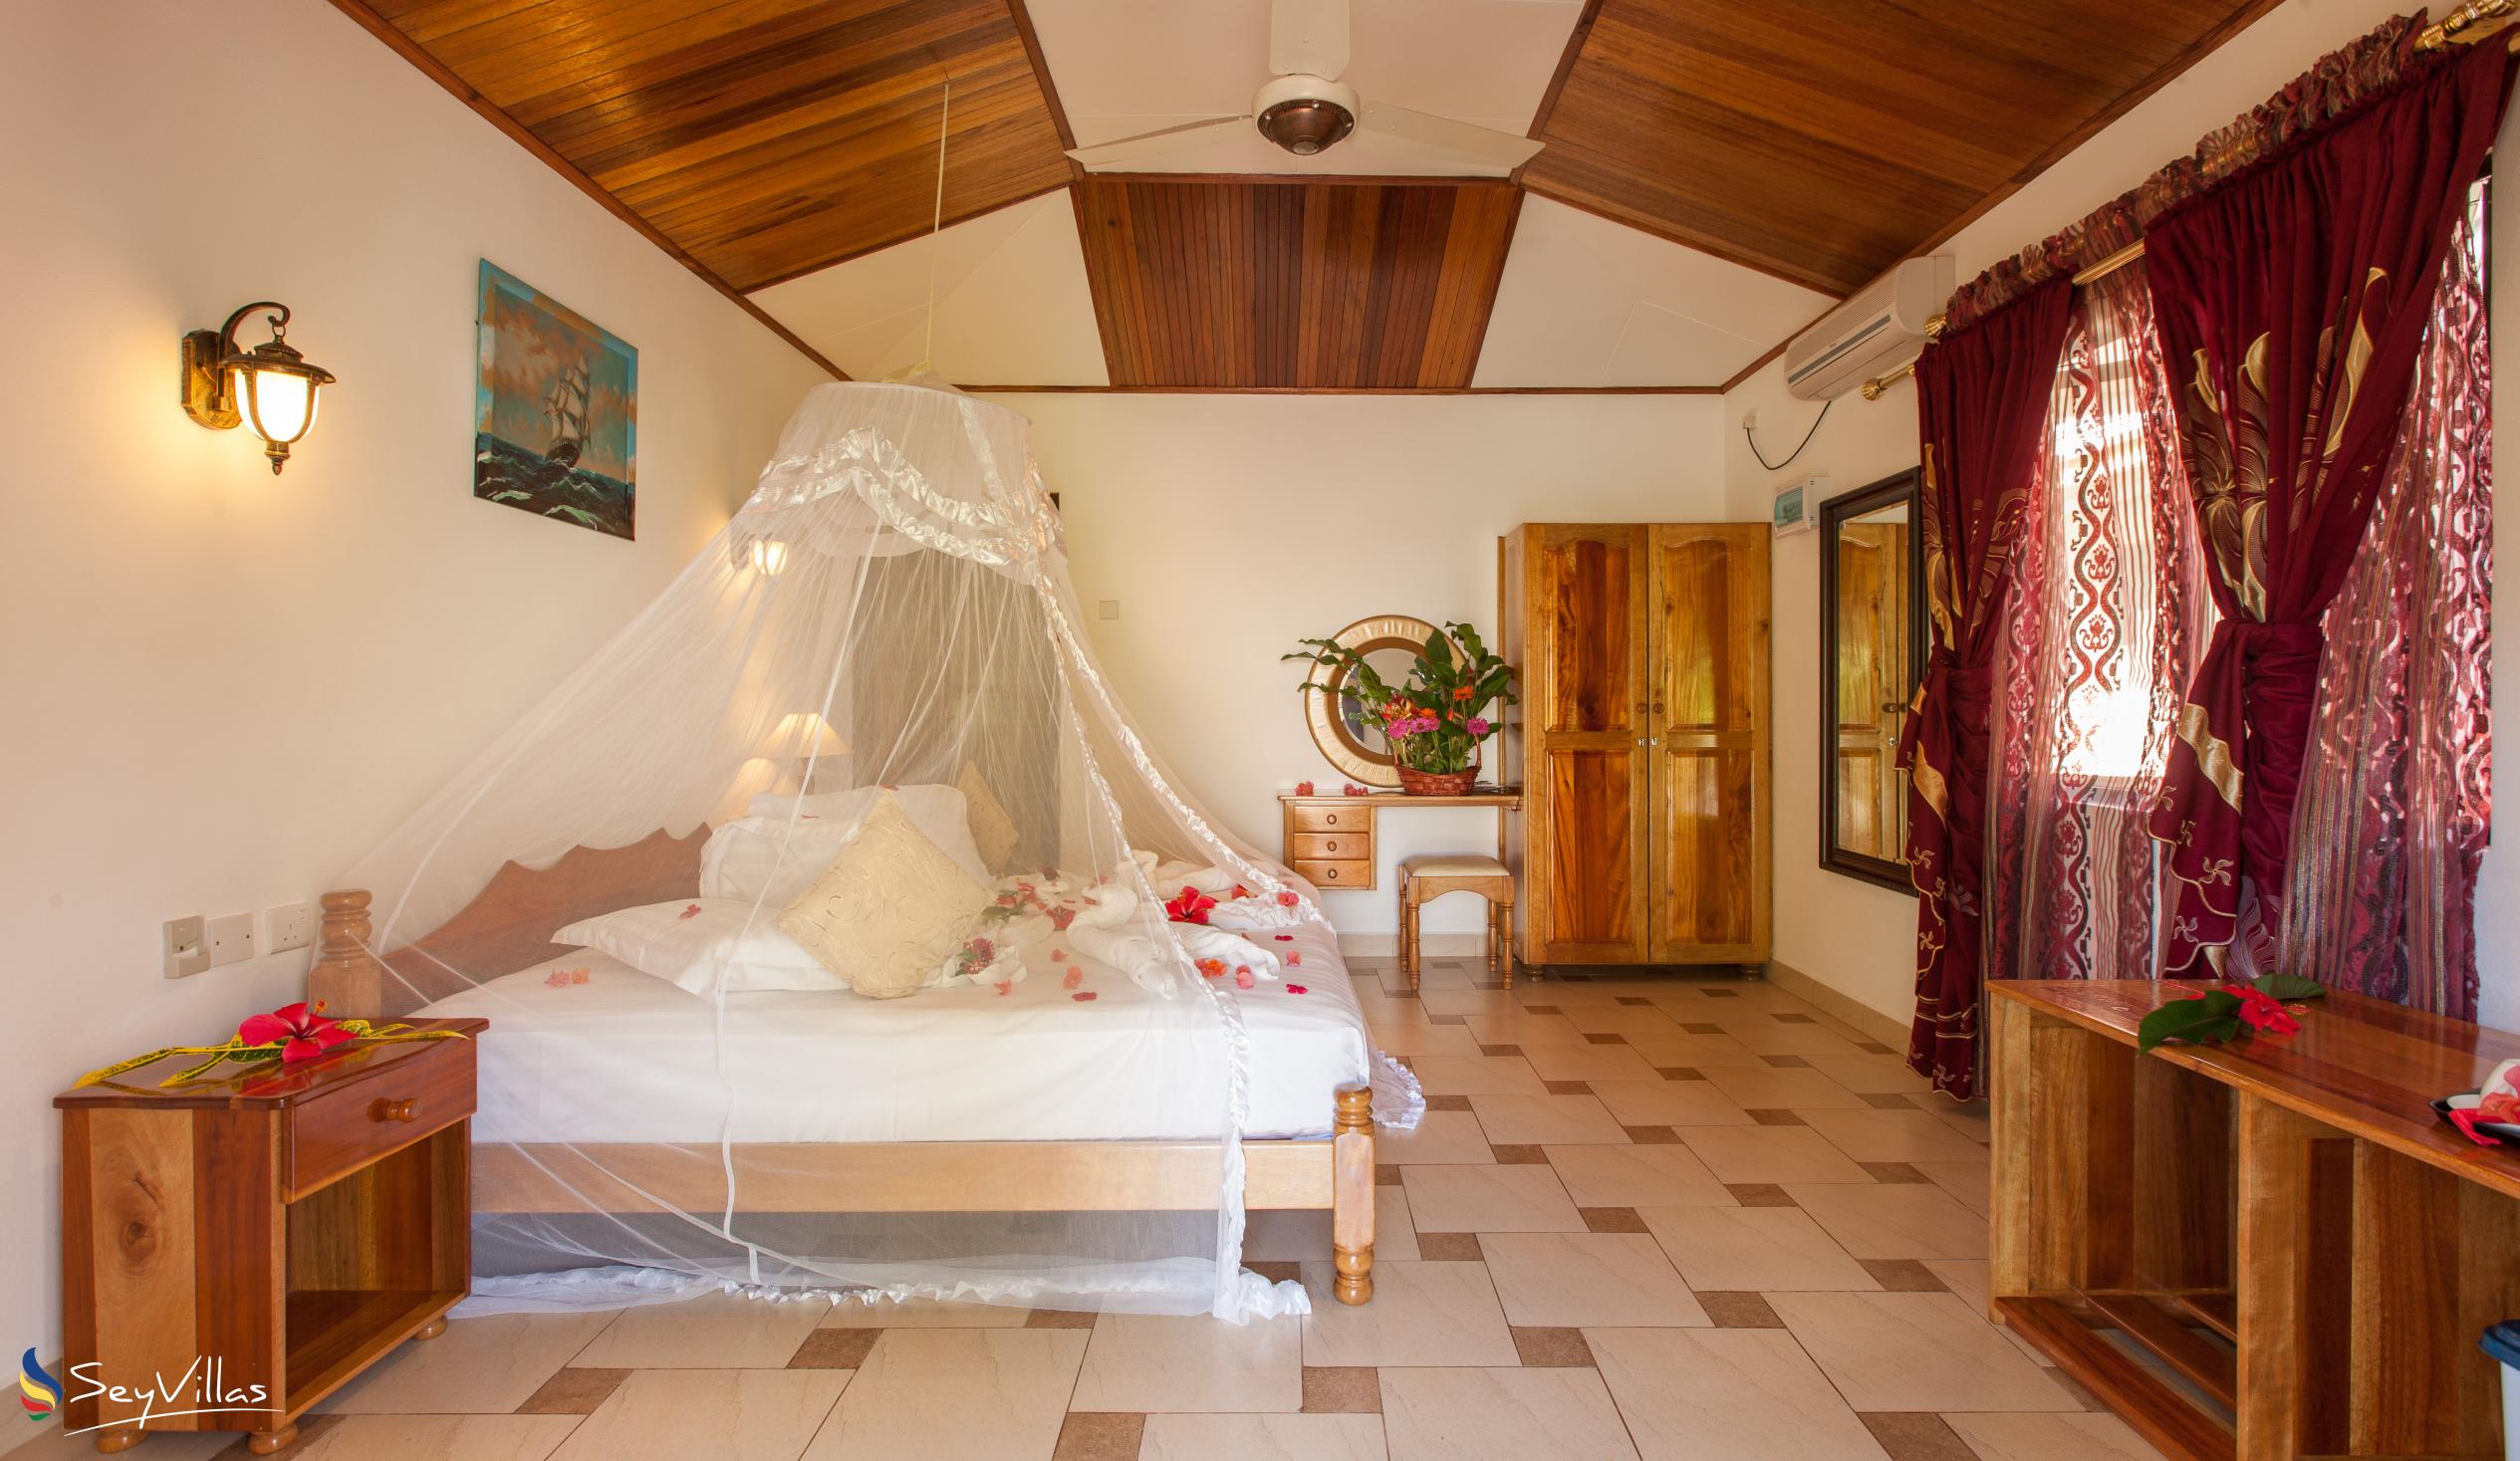 Photo 41: Etoile Labrine - Family Room - La Digue (Seychelles)